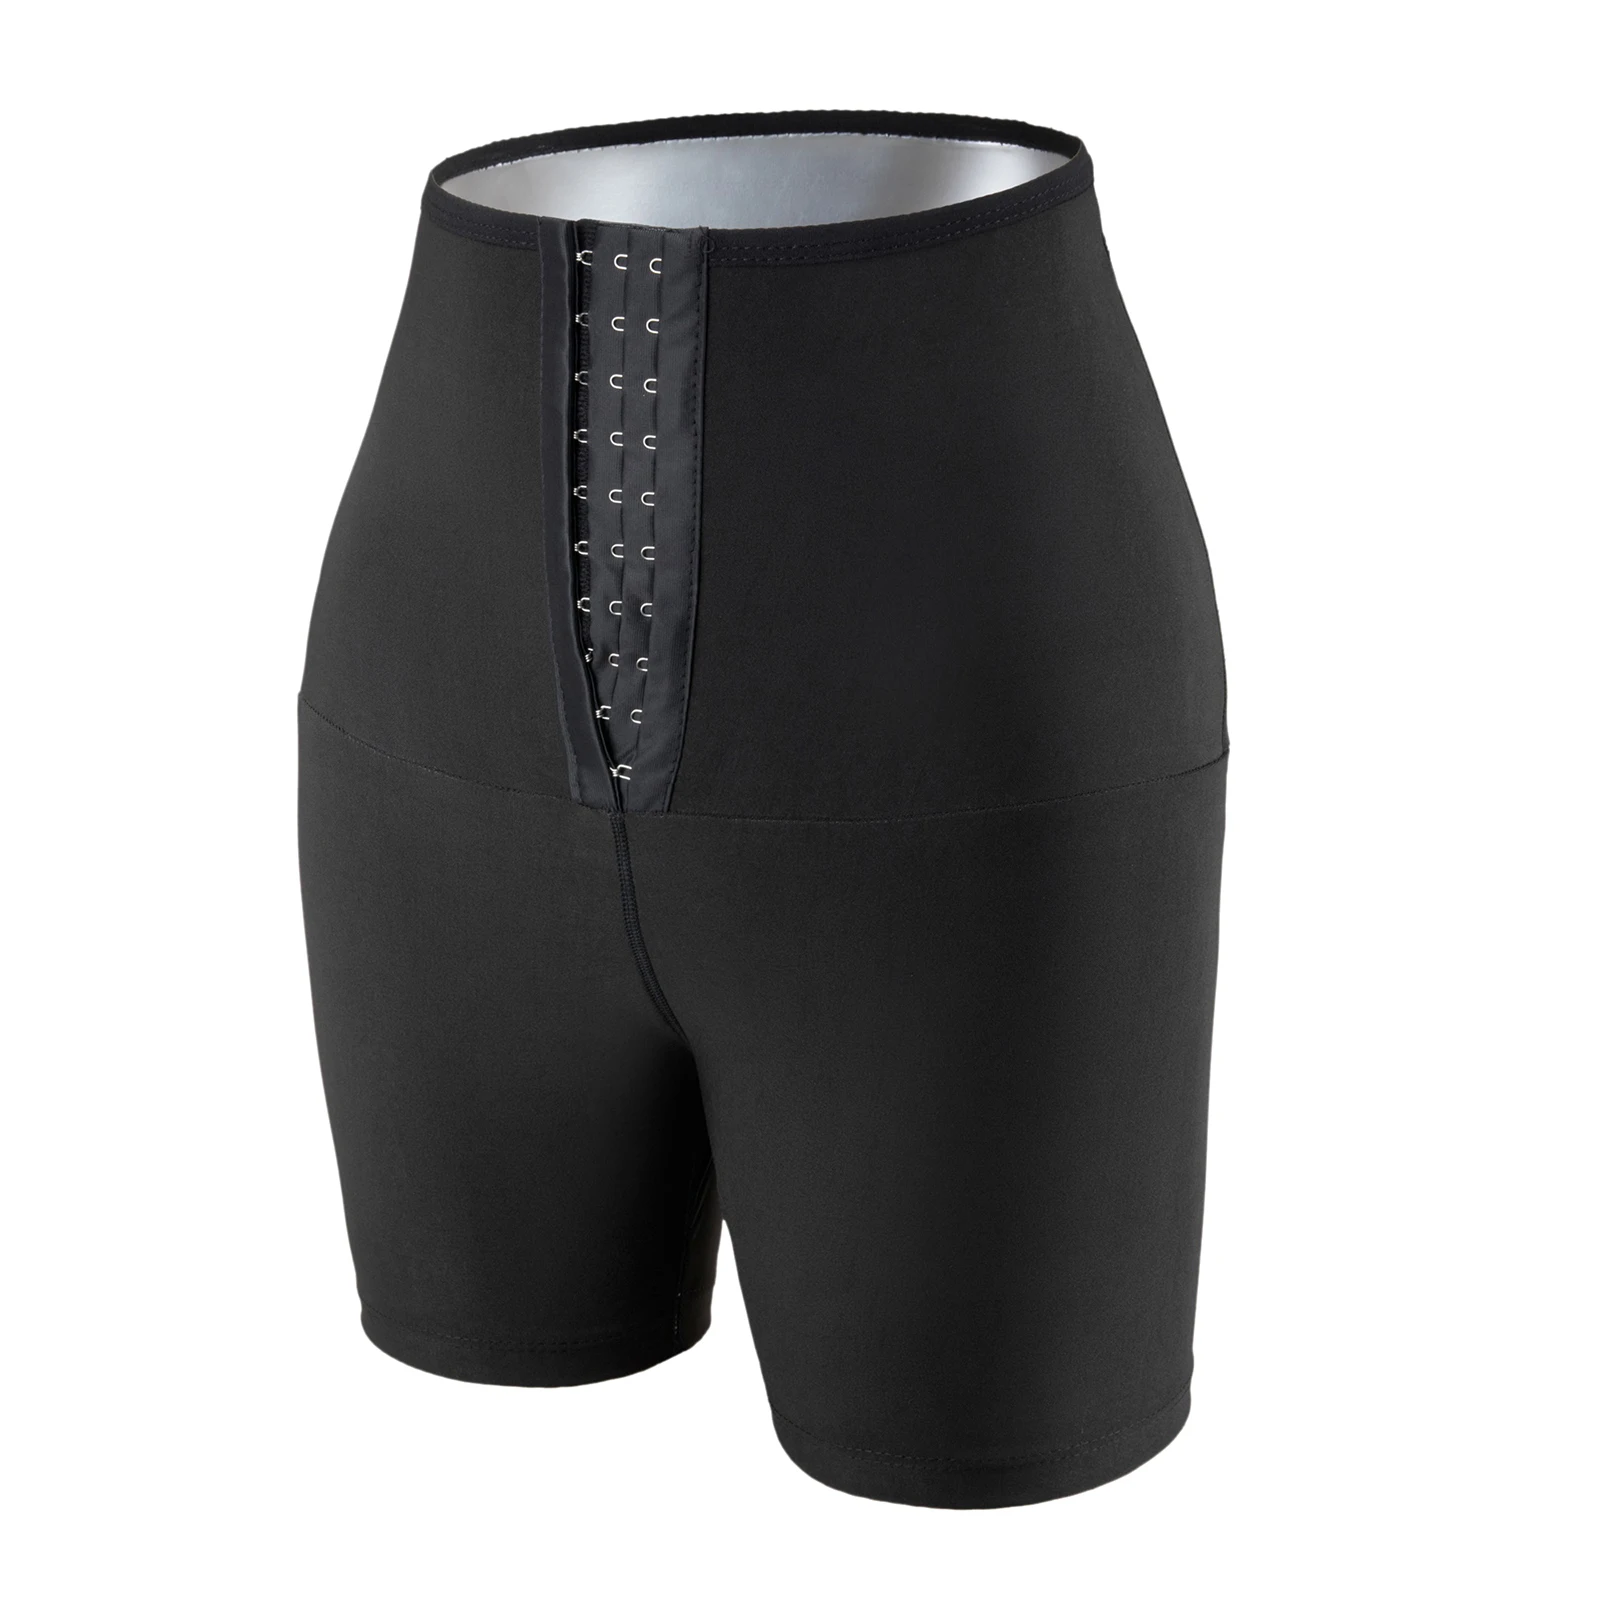 backless shapewear Sweat Pants Workout Fitness Slimming Sauna Shorts Sports Capris Body Shaper spanx underwear